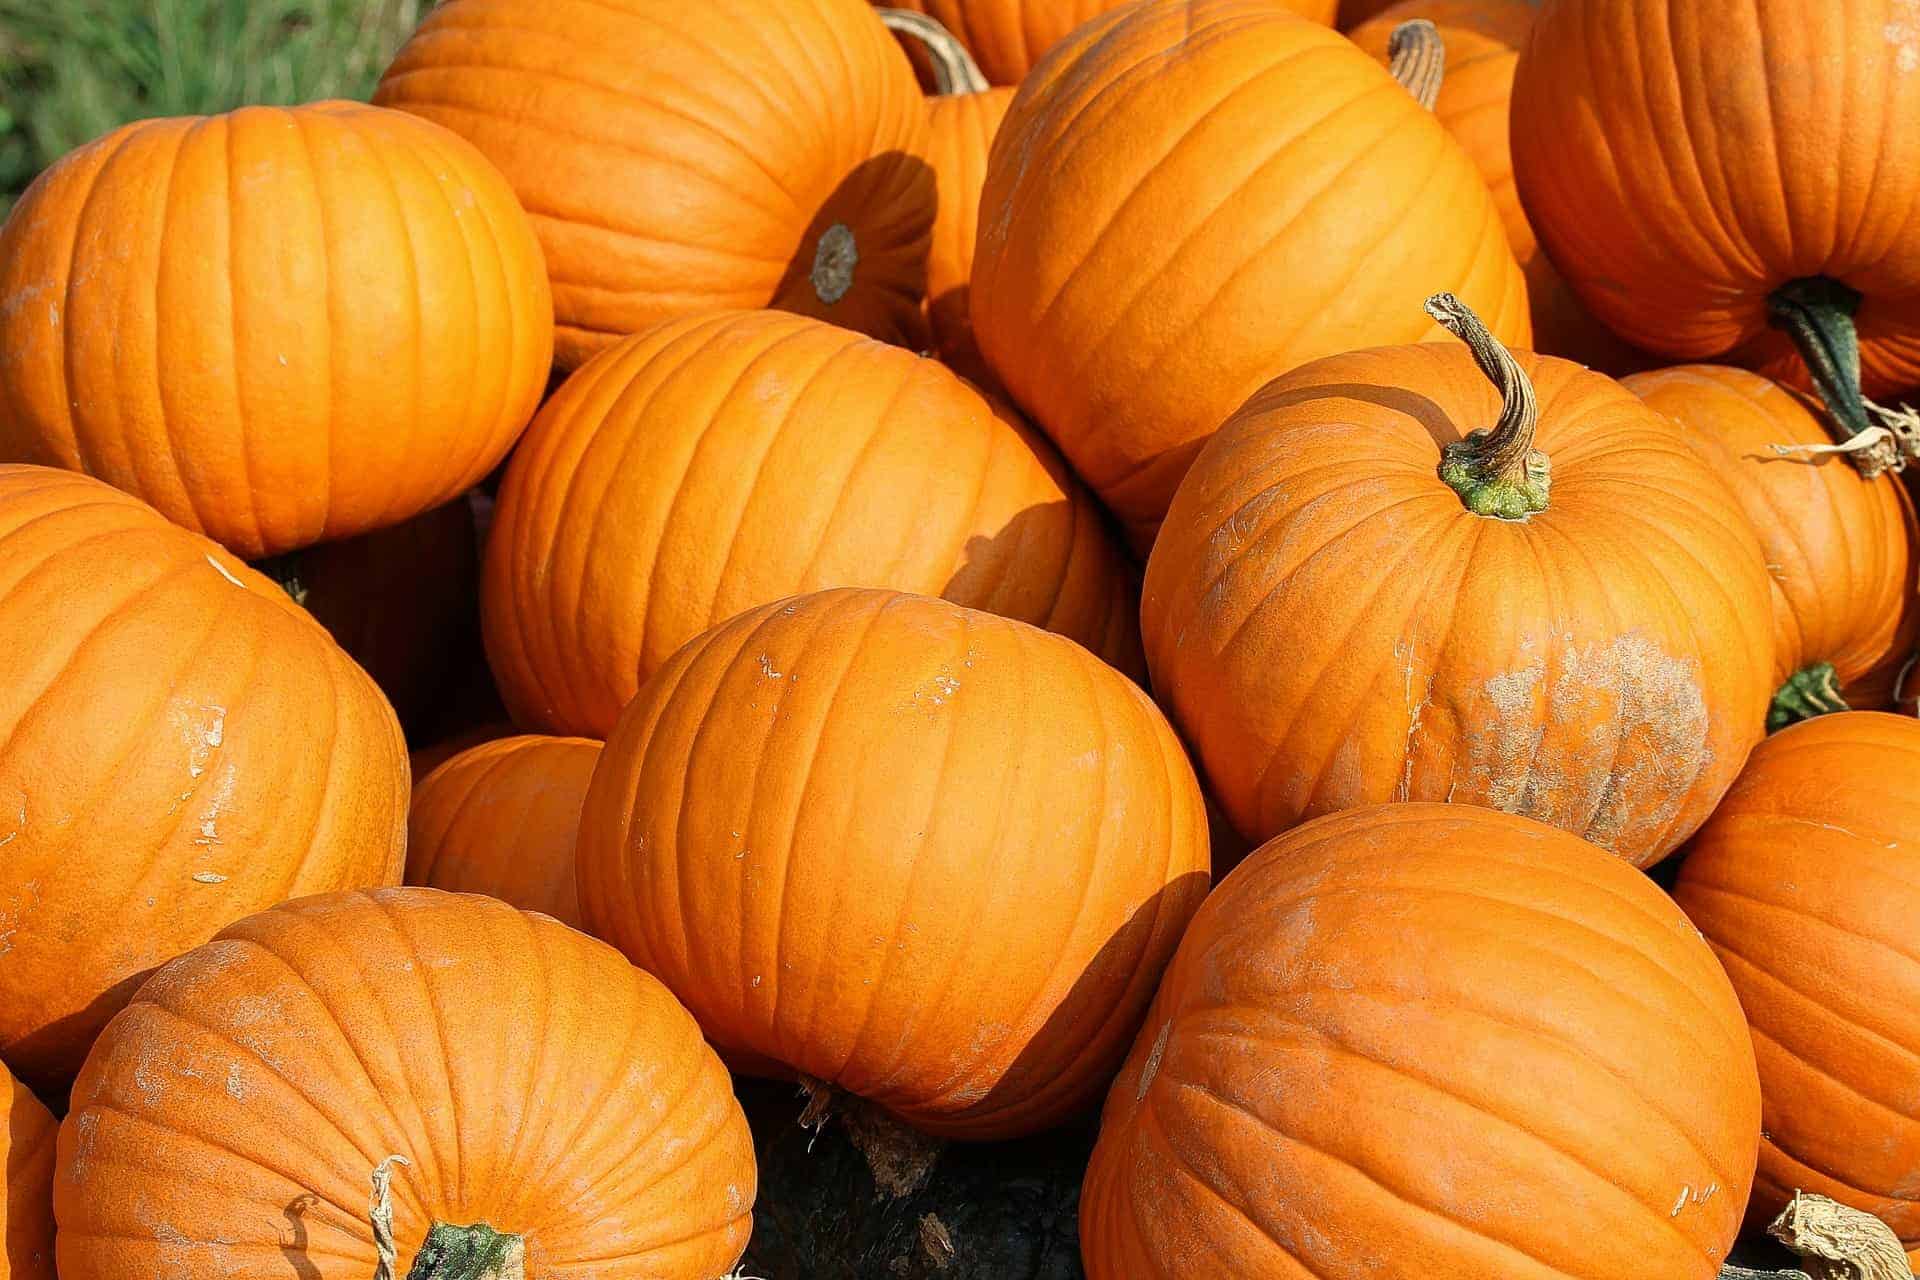 ‘Tis the season for all things pumpkin